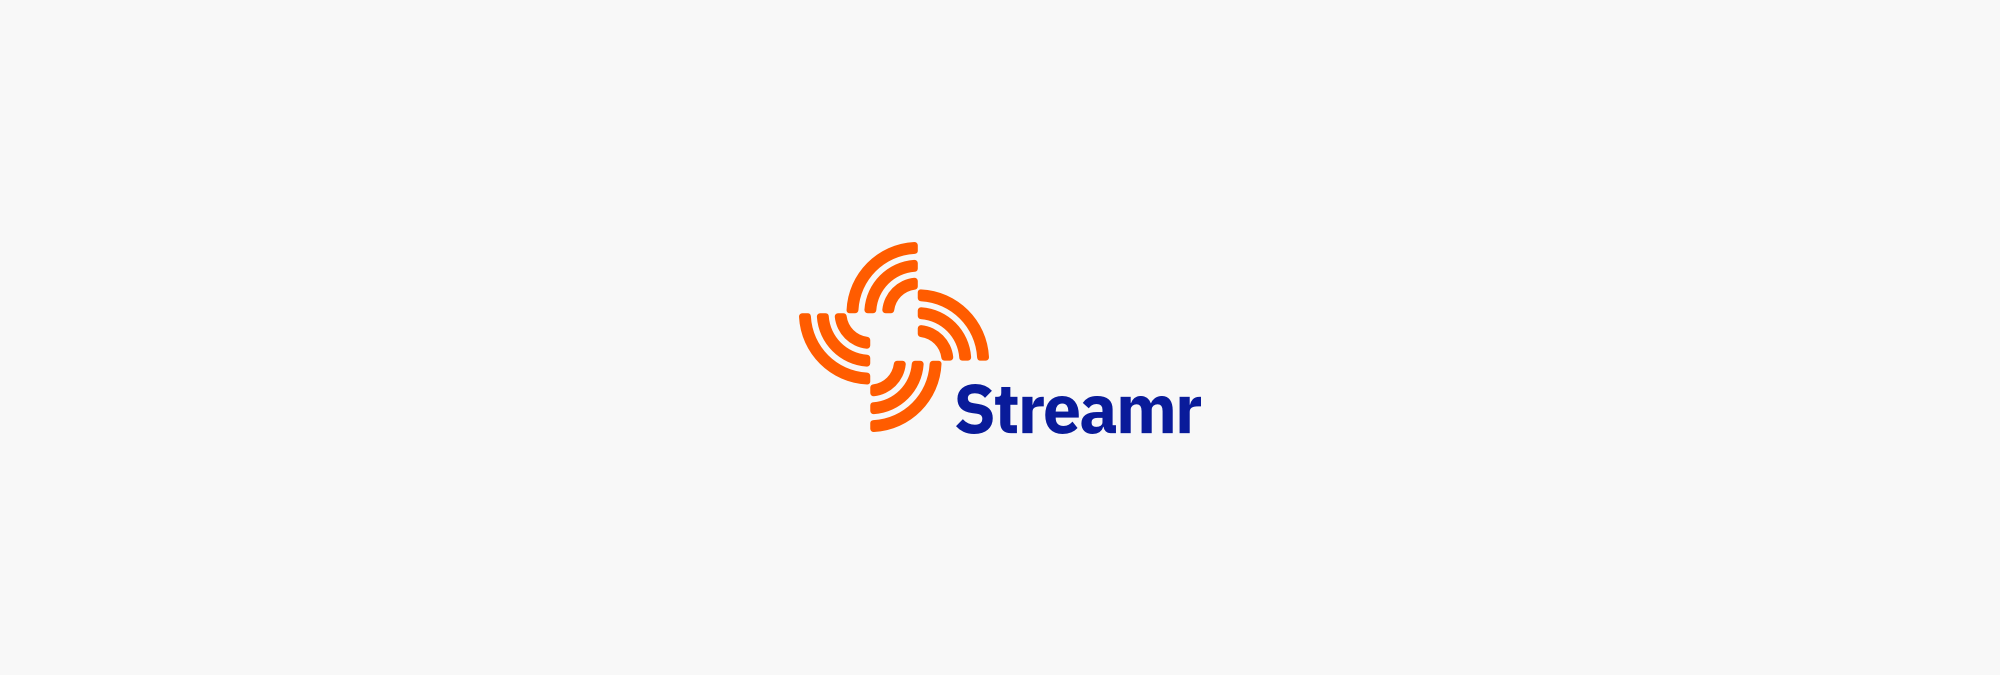 Upgrading Streamr’s identity